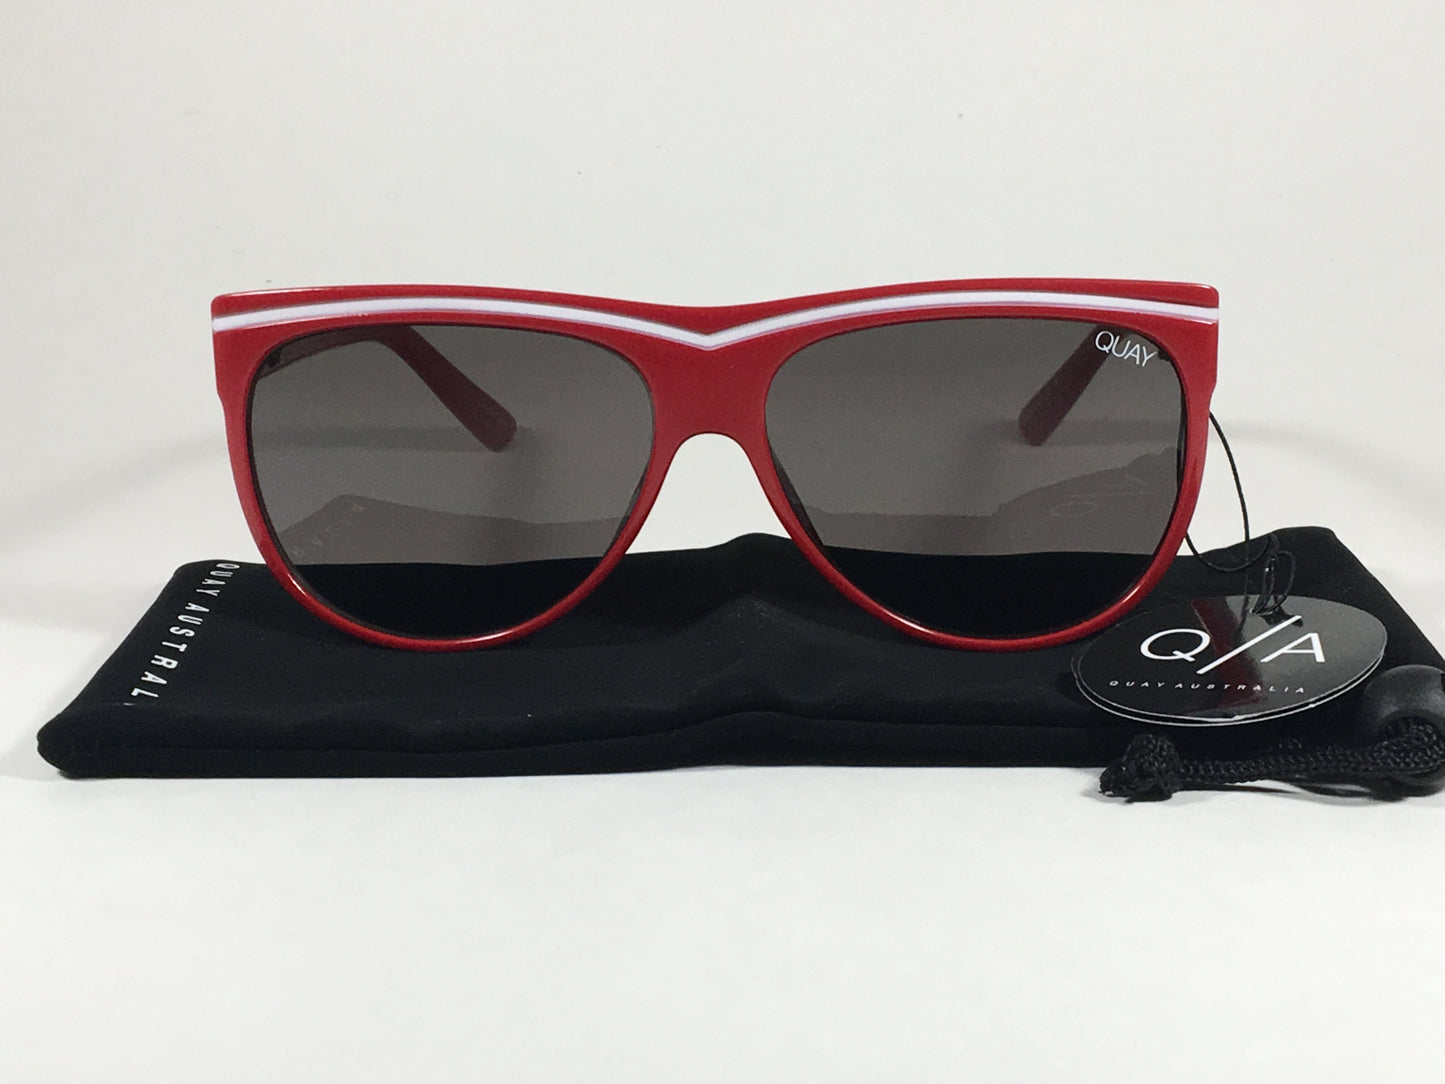 Quay Hollywood Nights Shield Sunglasses Red Plastic Frame Gray Smoke Lens Qw000223 Red Smk - Sunglasses